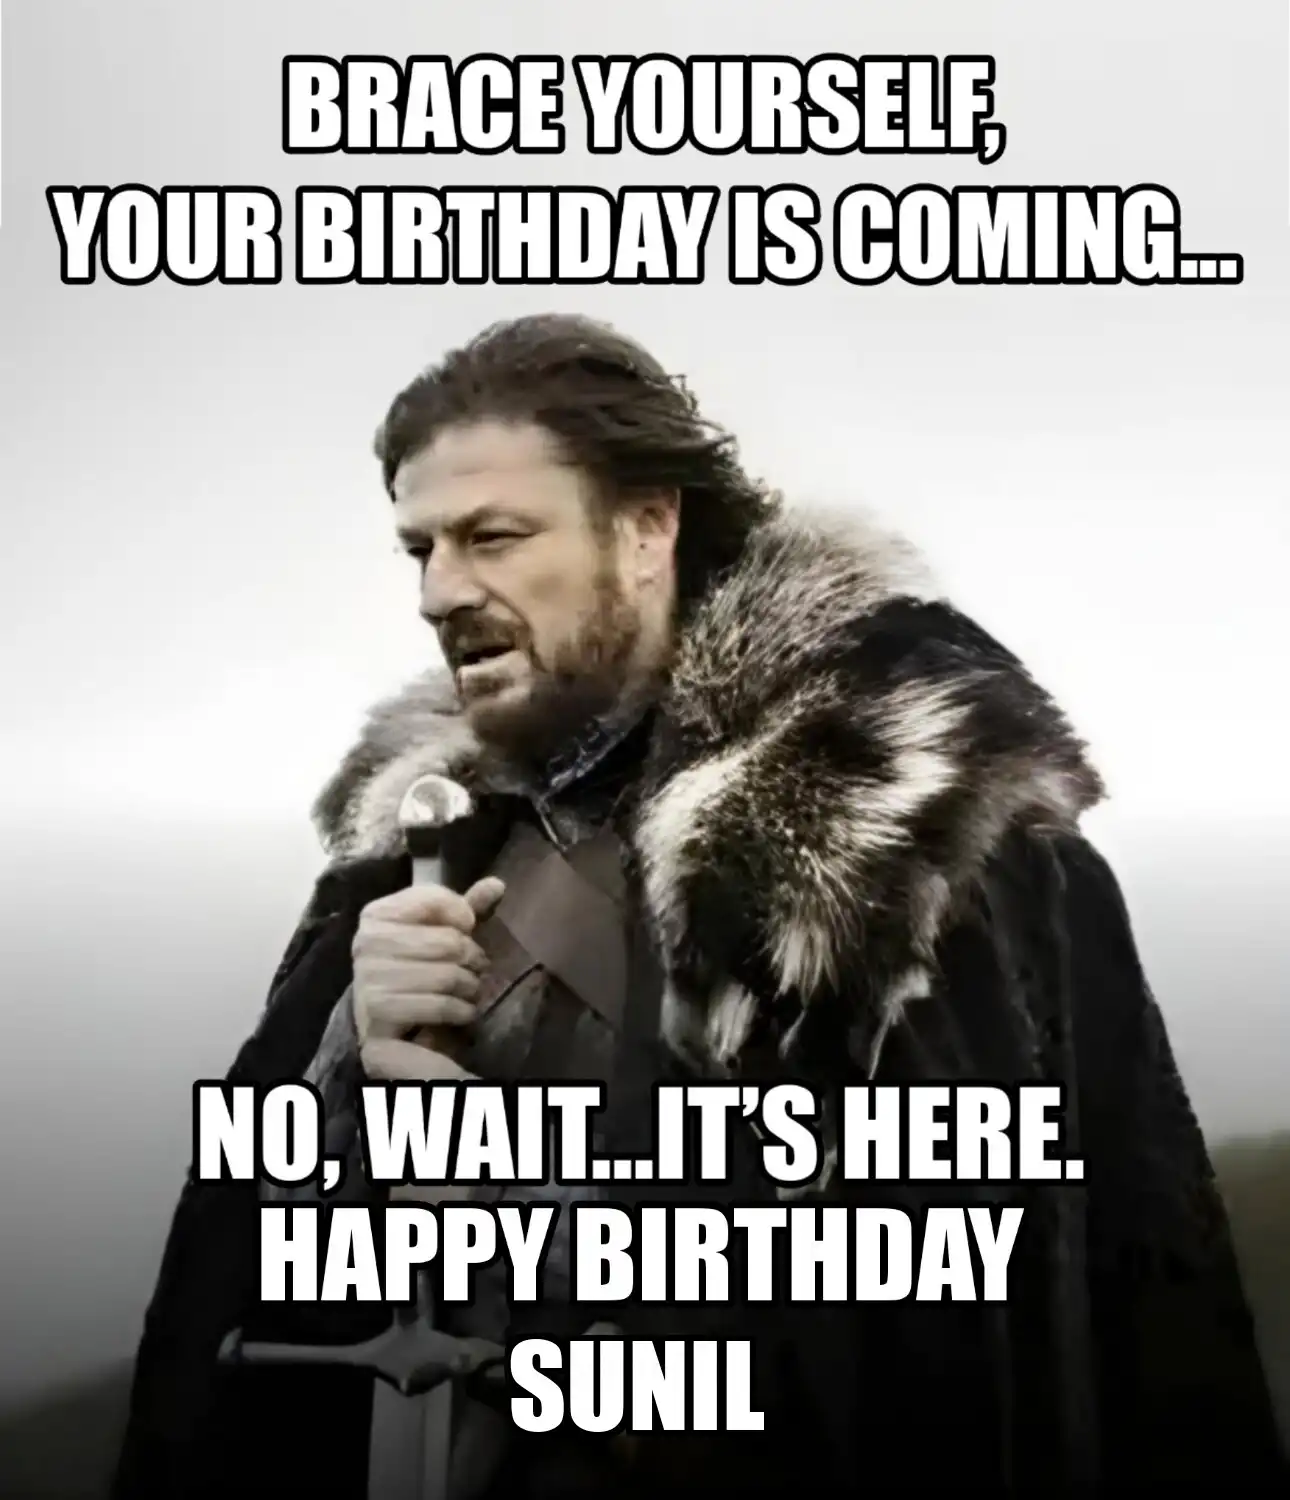 Happy Birthday Sunil Brace Yourself Your Birthday Is Coming Meme